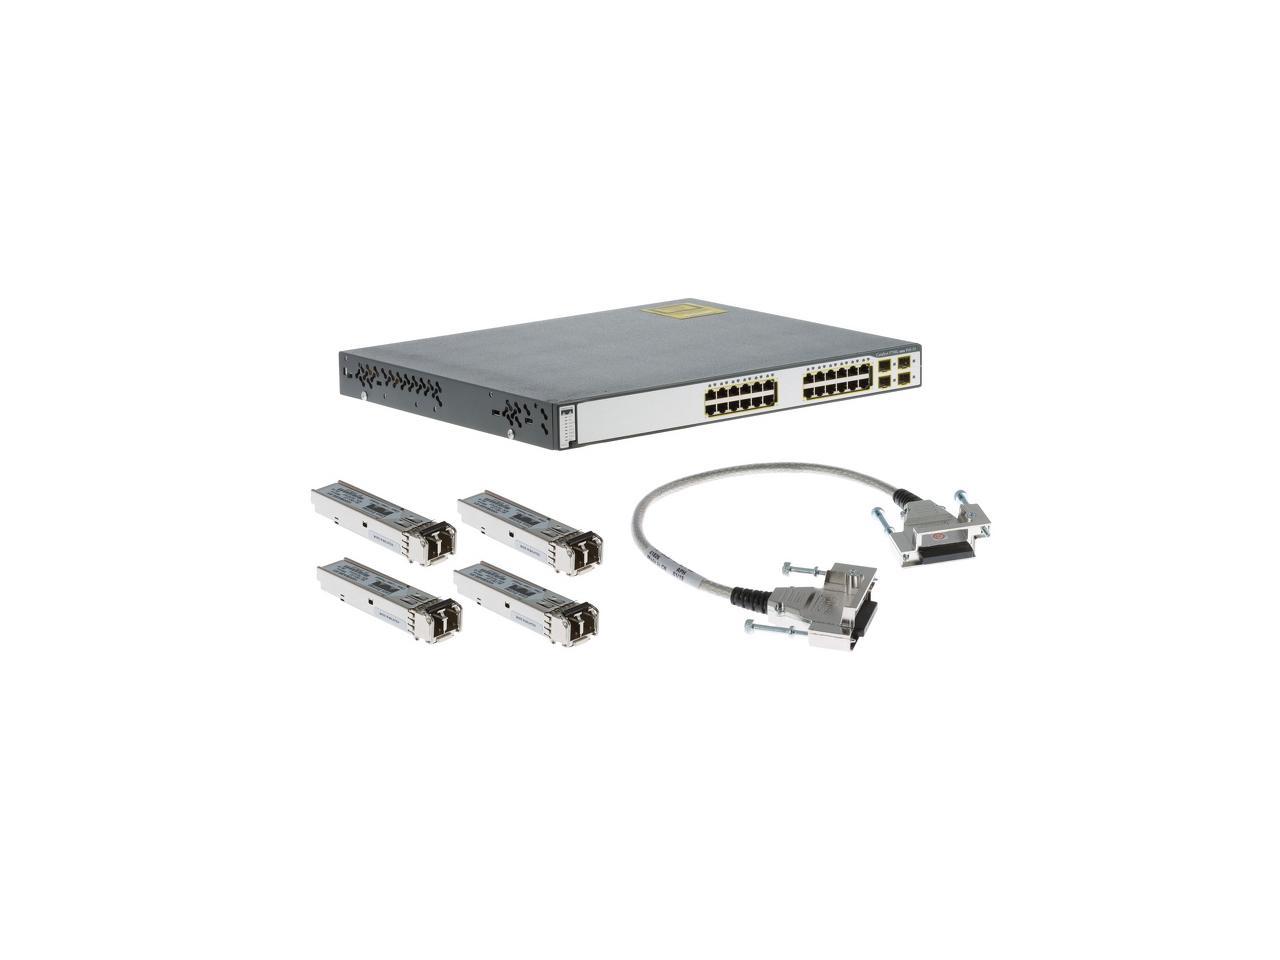 Cisco 3750G Series 24 Port Deployment Pack, WS-C3750G-24PS-S, Lifetime Warranty, WS-C3750G-24PS-S-DP